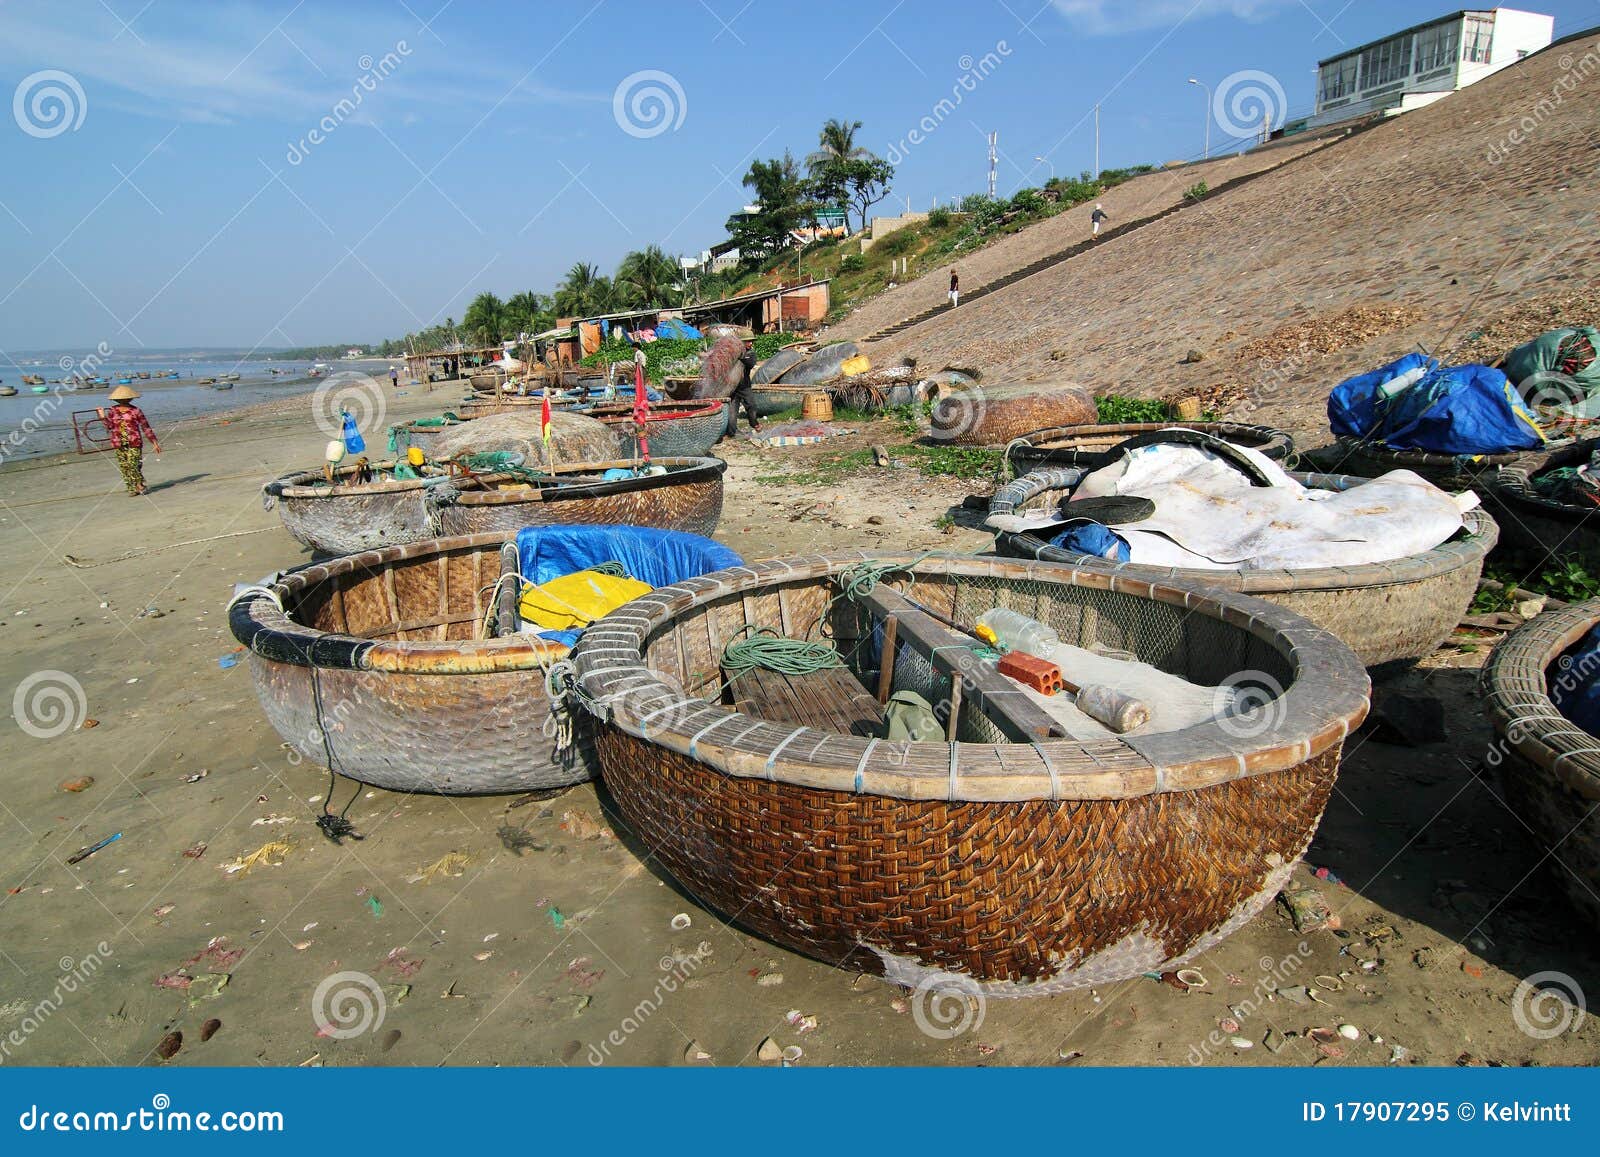 Fishing Boats At Mui Ne, Vietnam Editorial Image - Image 